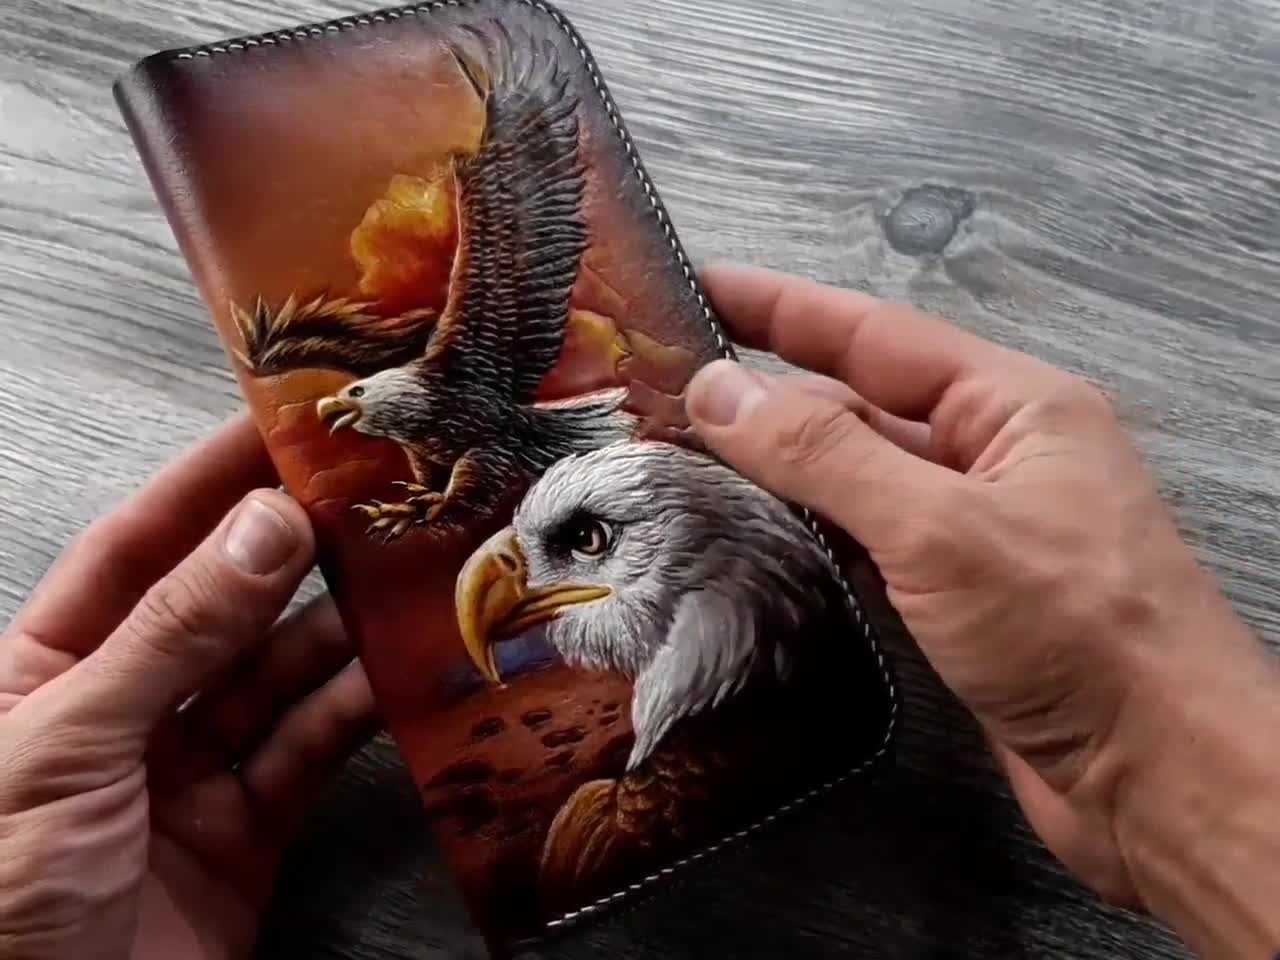 Genuine Leather Bifold Wallet American Bald Eagle Black ID C